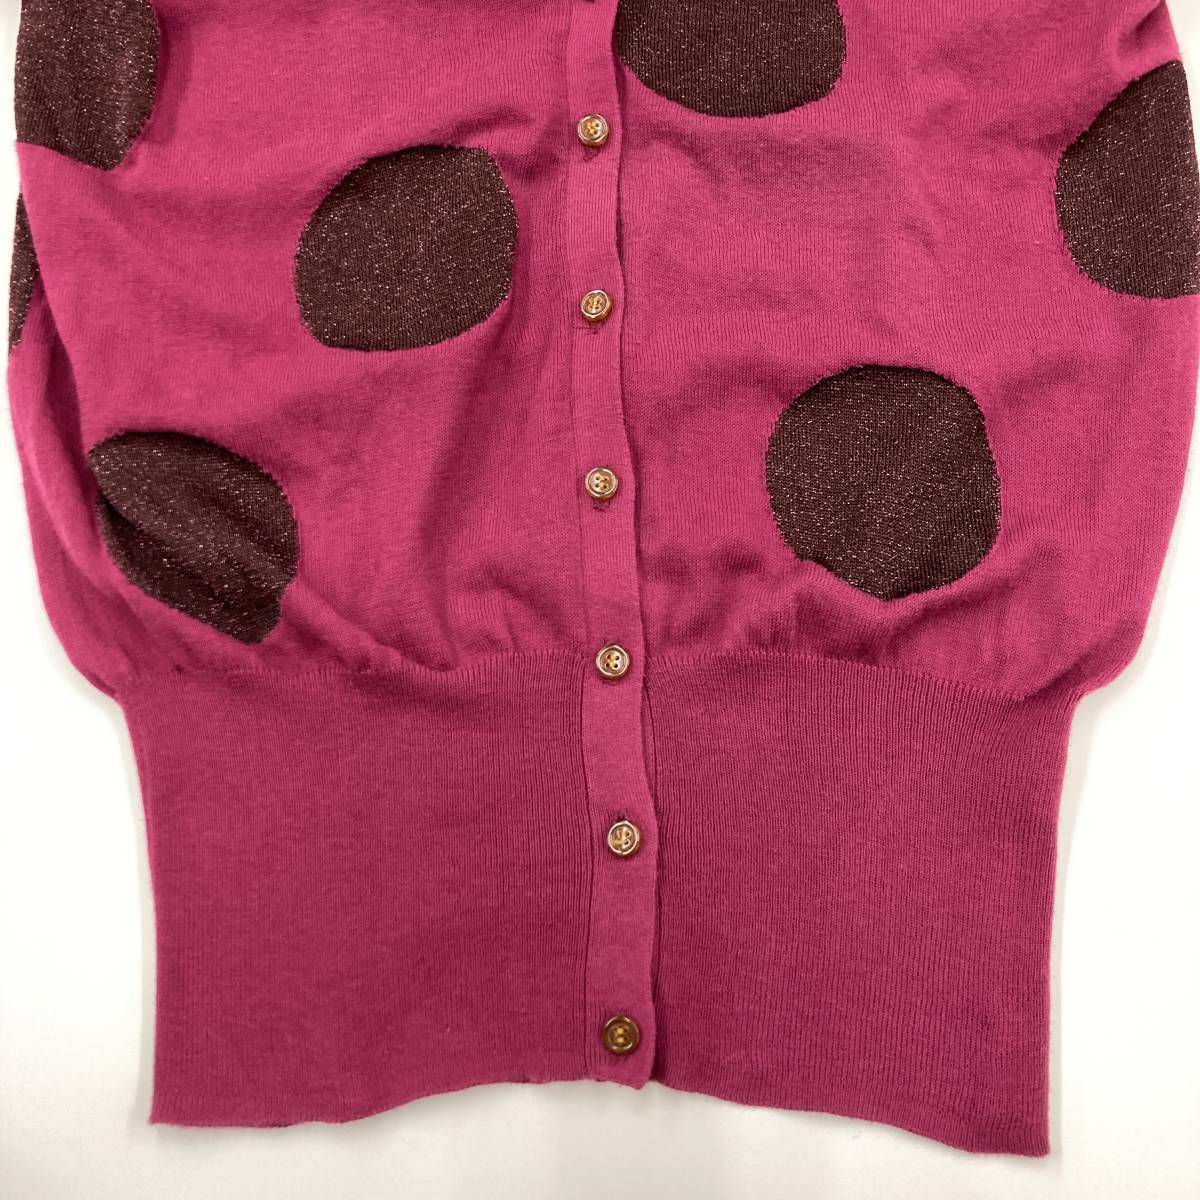  Vivienne Westwood RED LABEL спот ламе точка полька-дот o-b вышивка хлопок вязаный кардиган 2 размер свитер 3060099